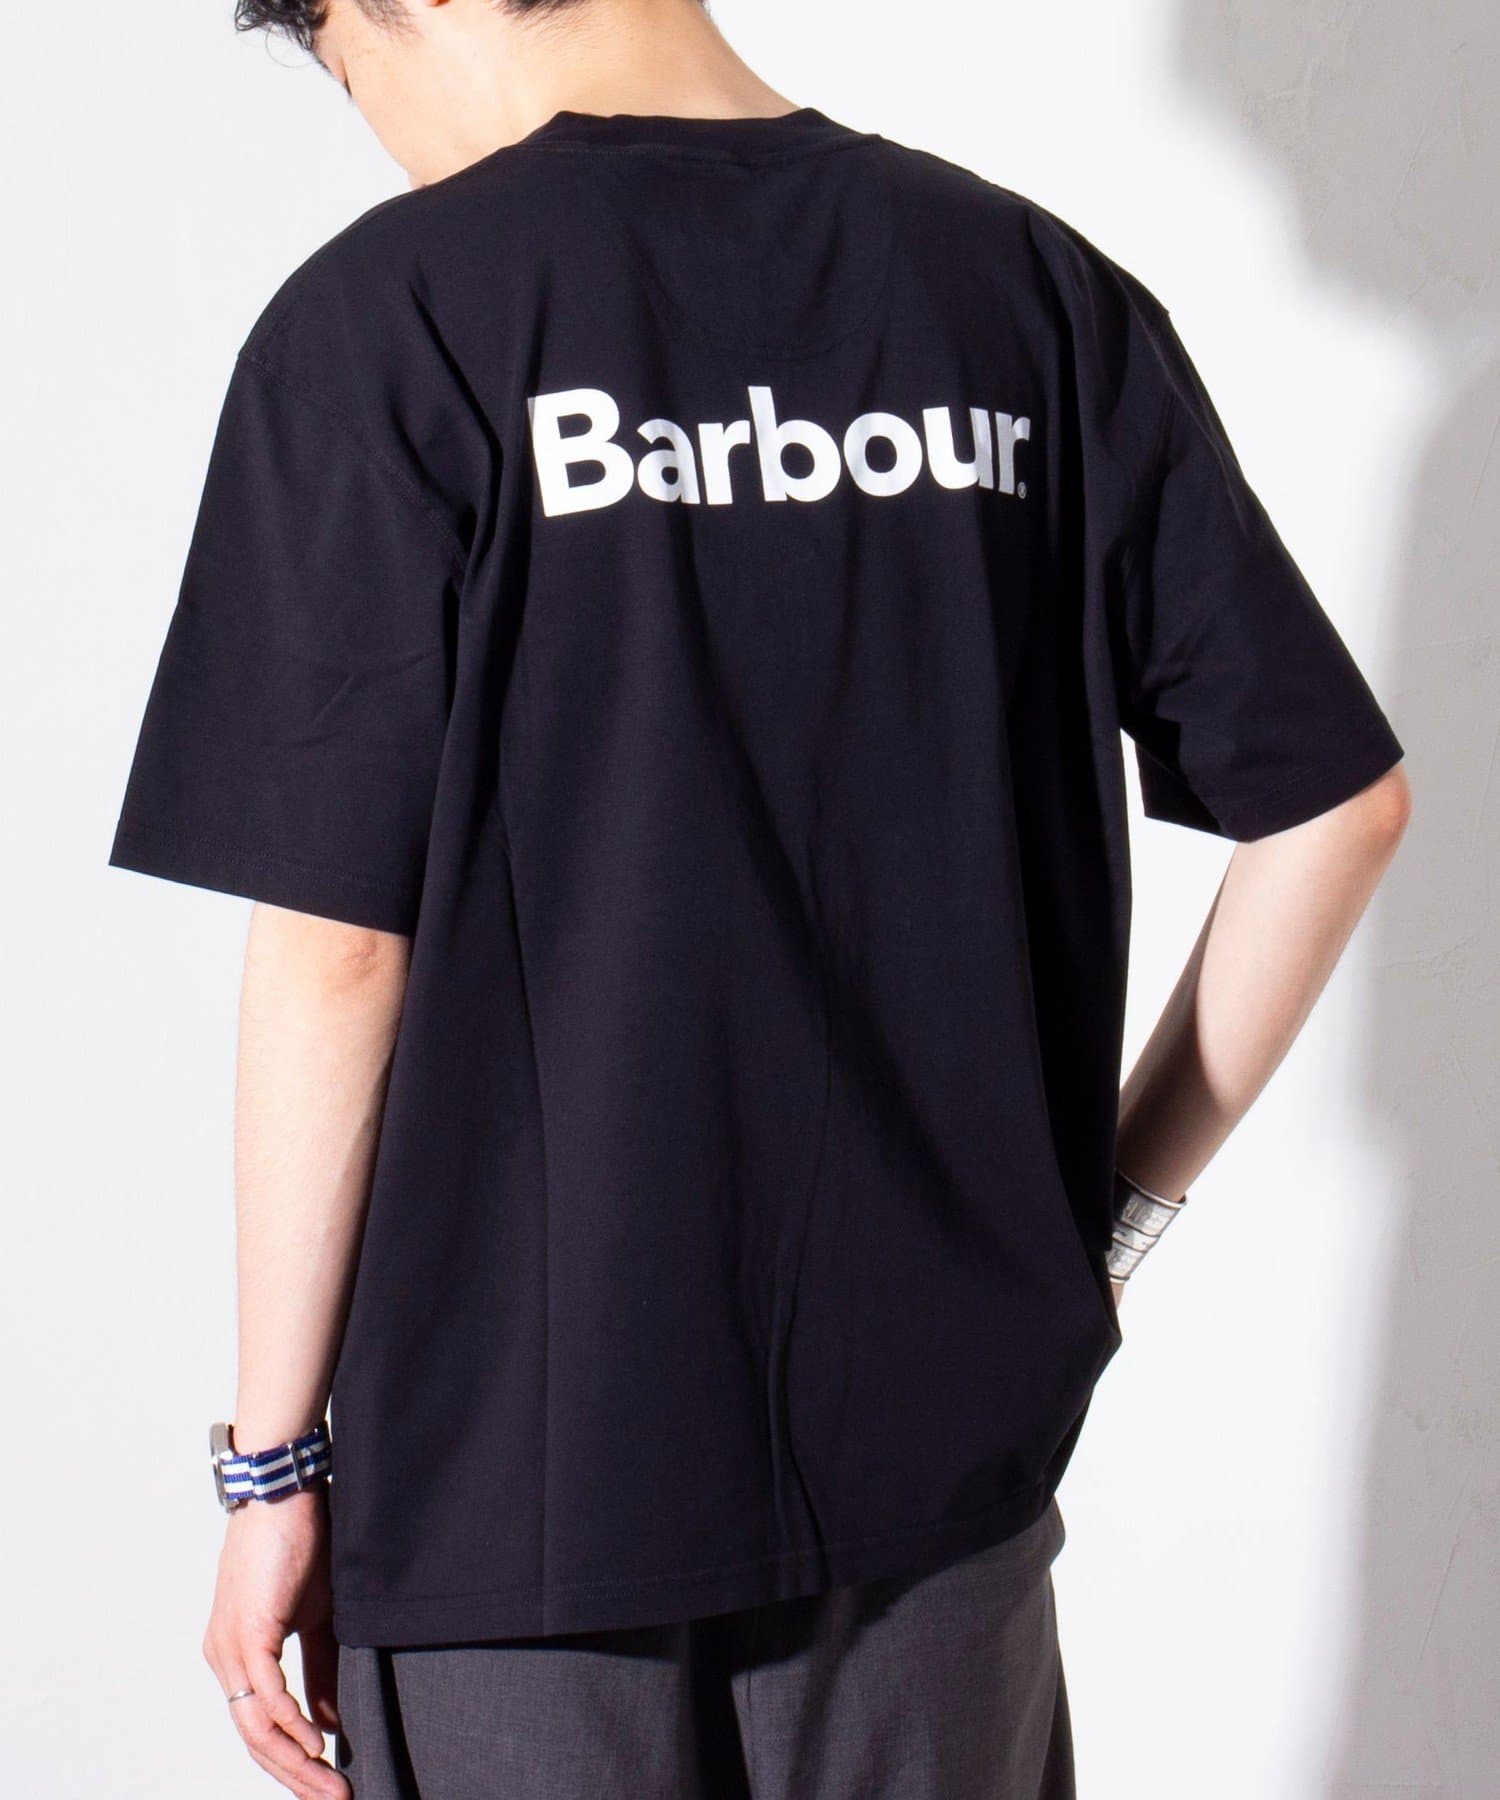 FREDY & GLOSTER(フレディ アンド グロスター) 【Barbour】Strowell ロゴ バックプリント Tシャツ